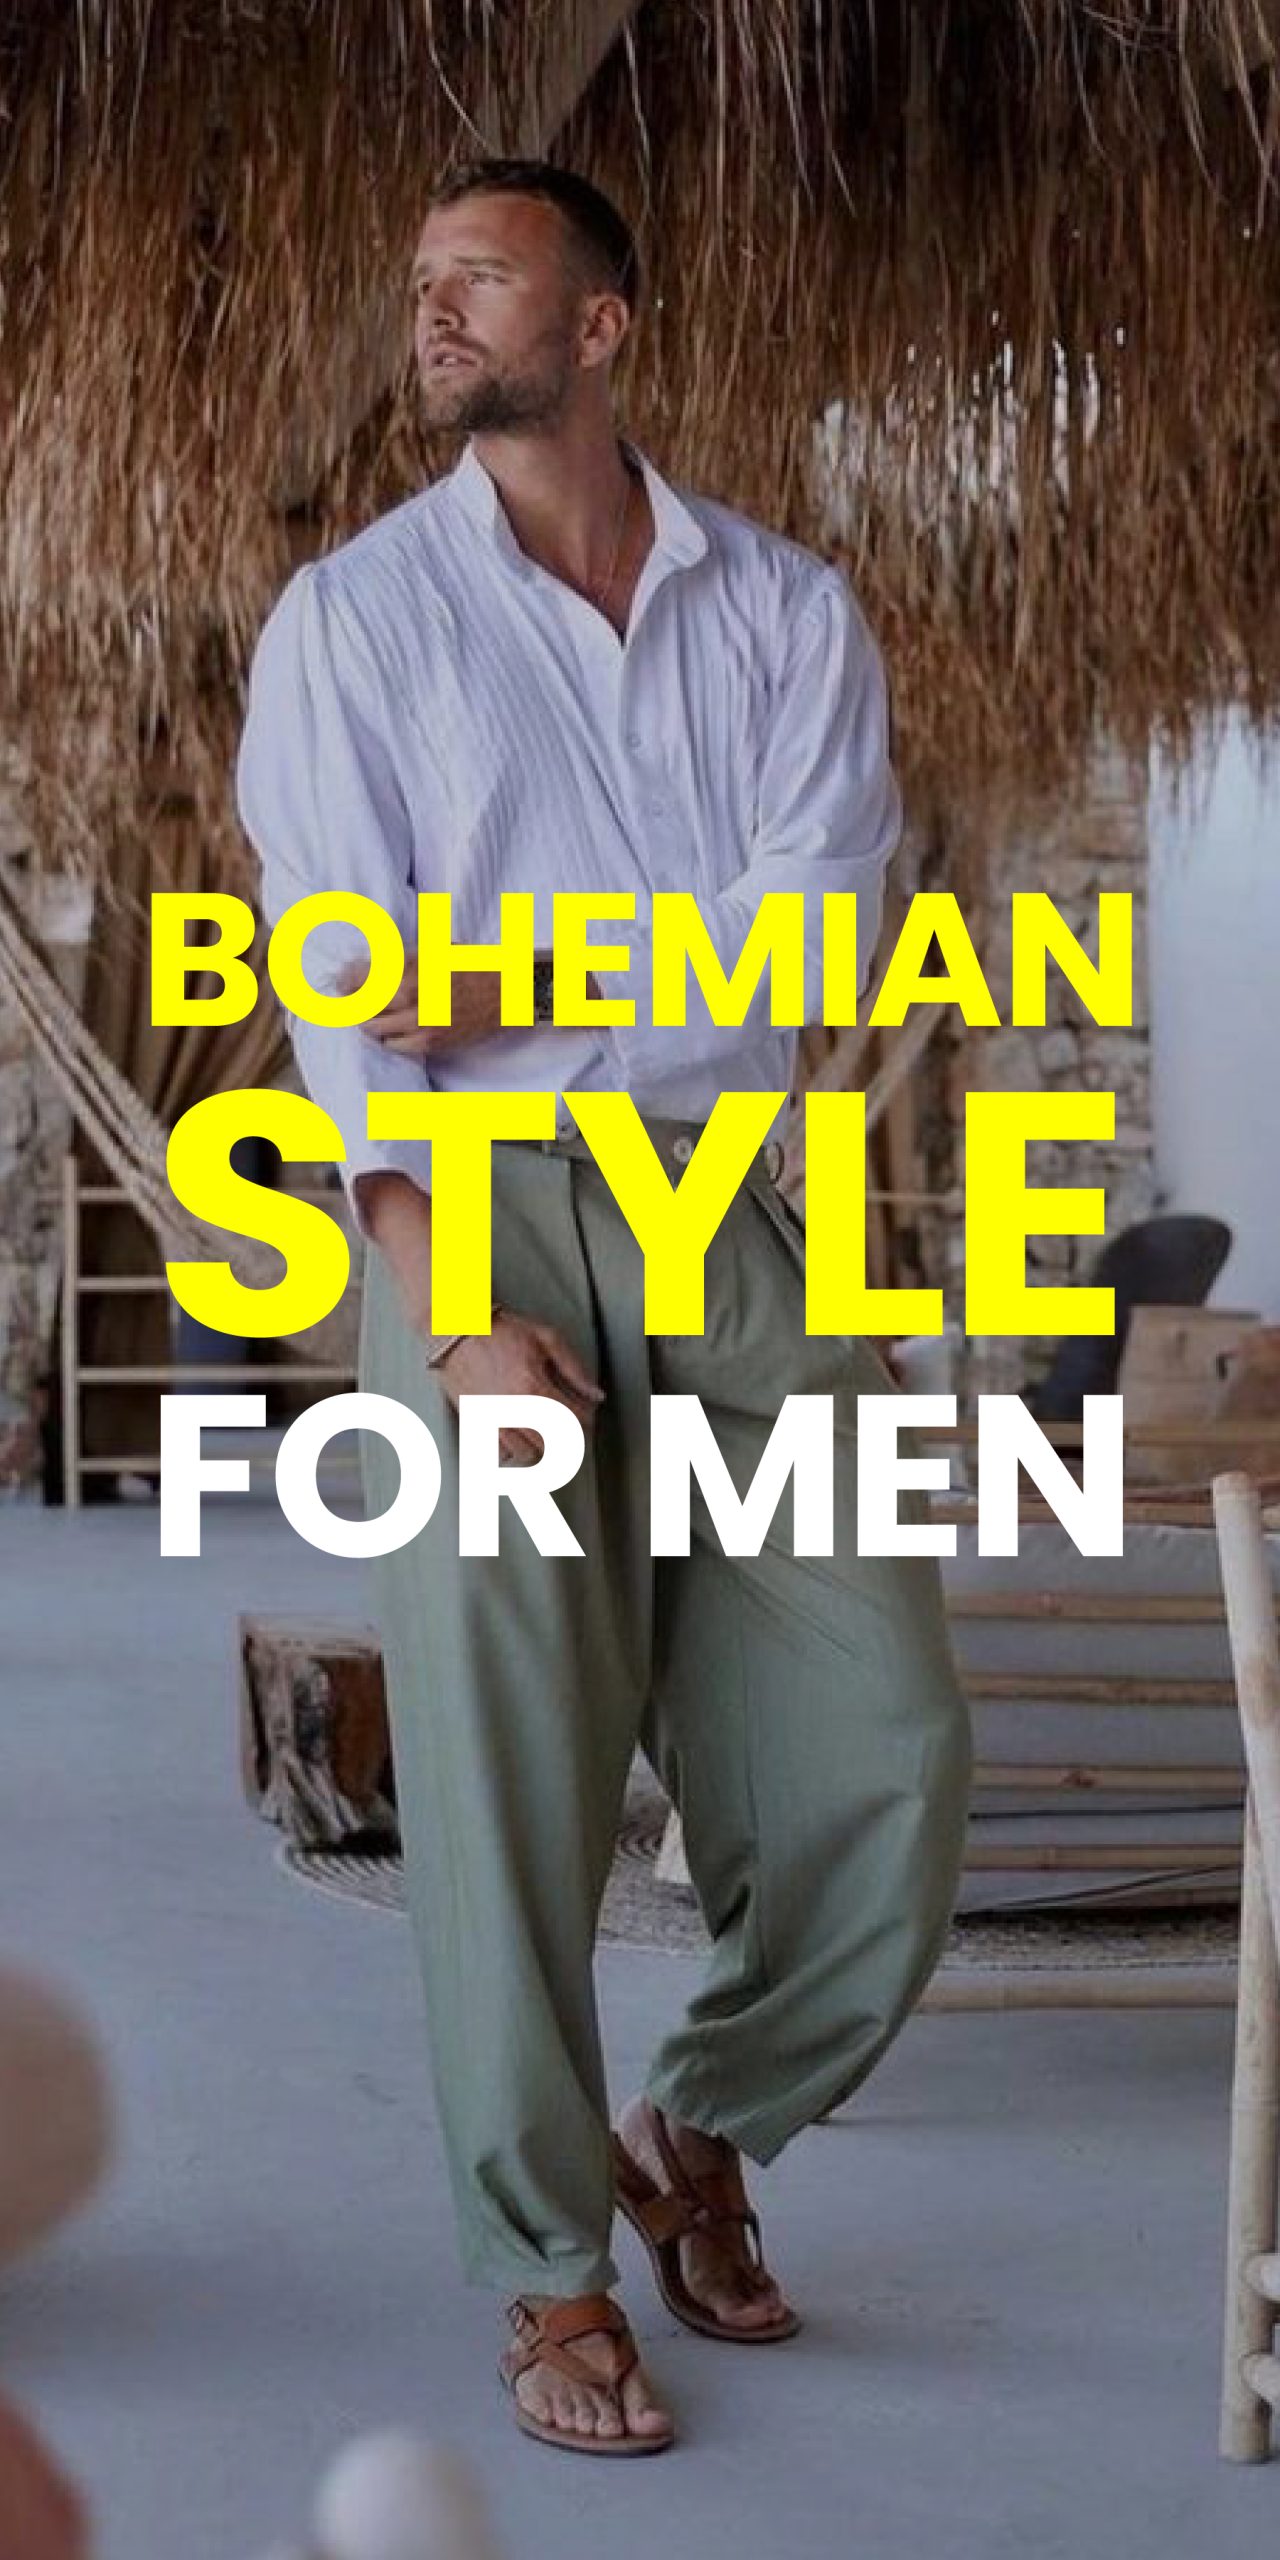 BOHEMIAN STYLE FOR MEN